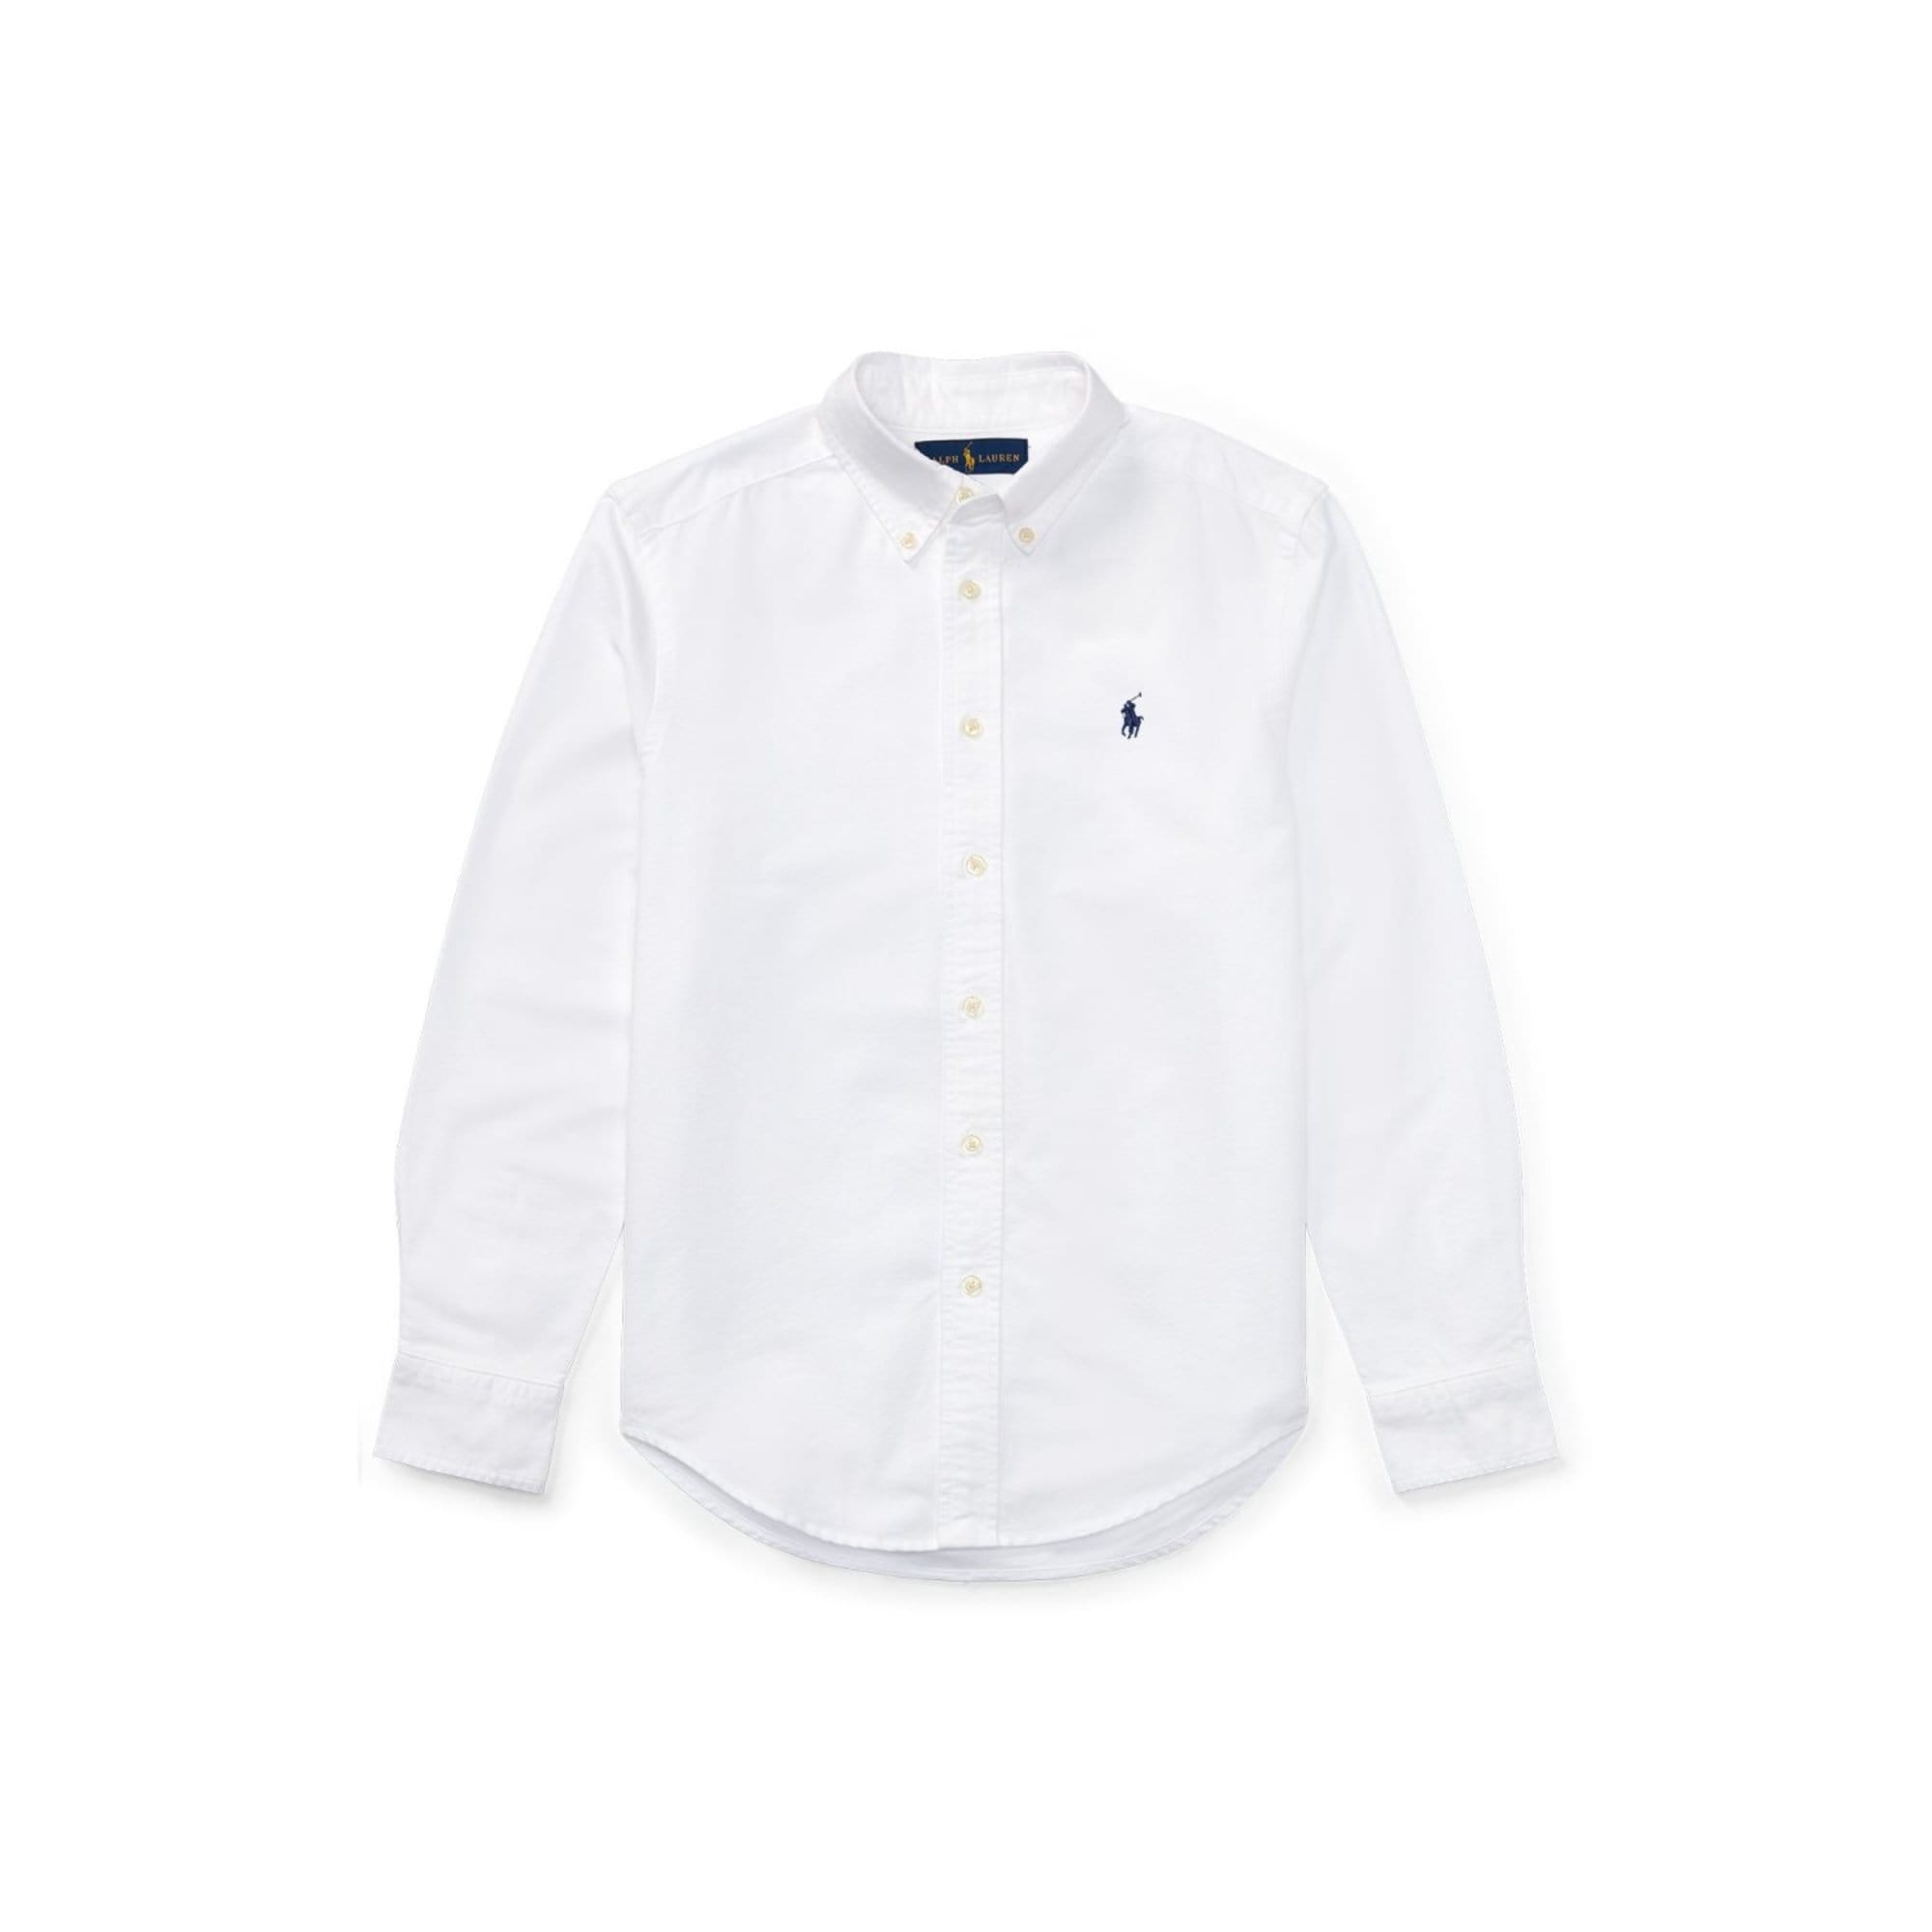 Polo Ralph Lauren Shirts Boys Polo Ralph Lauren White Shirt